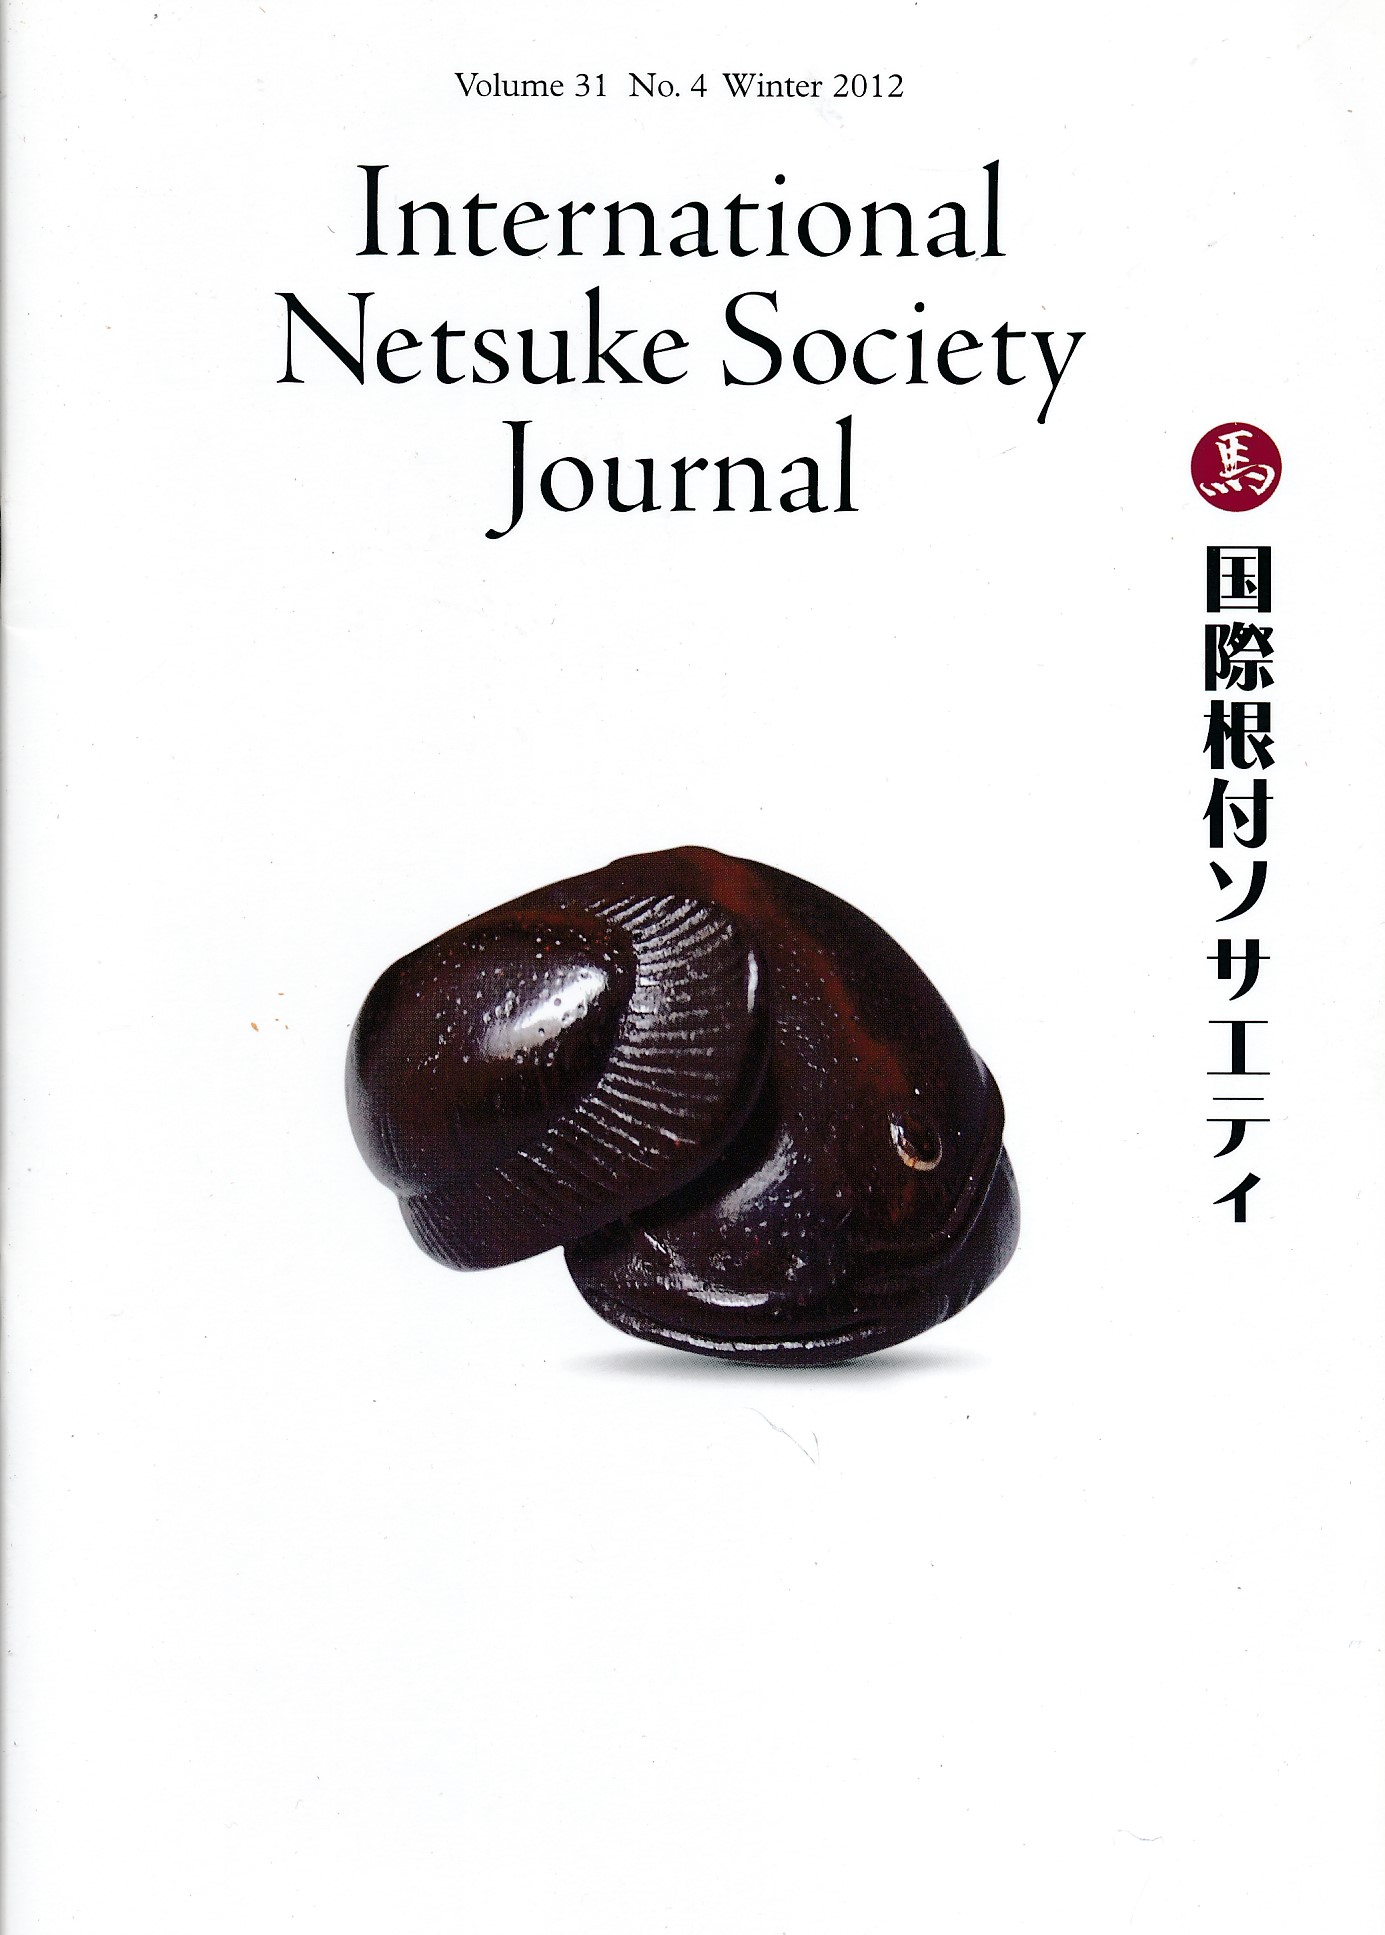 International Netsuke Society Journal. Volume 31 No. 4. Winter. 2012.